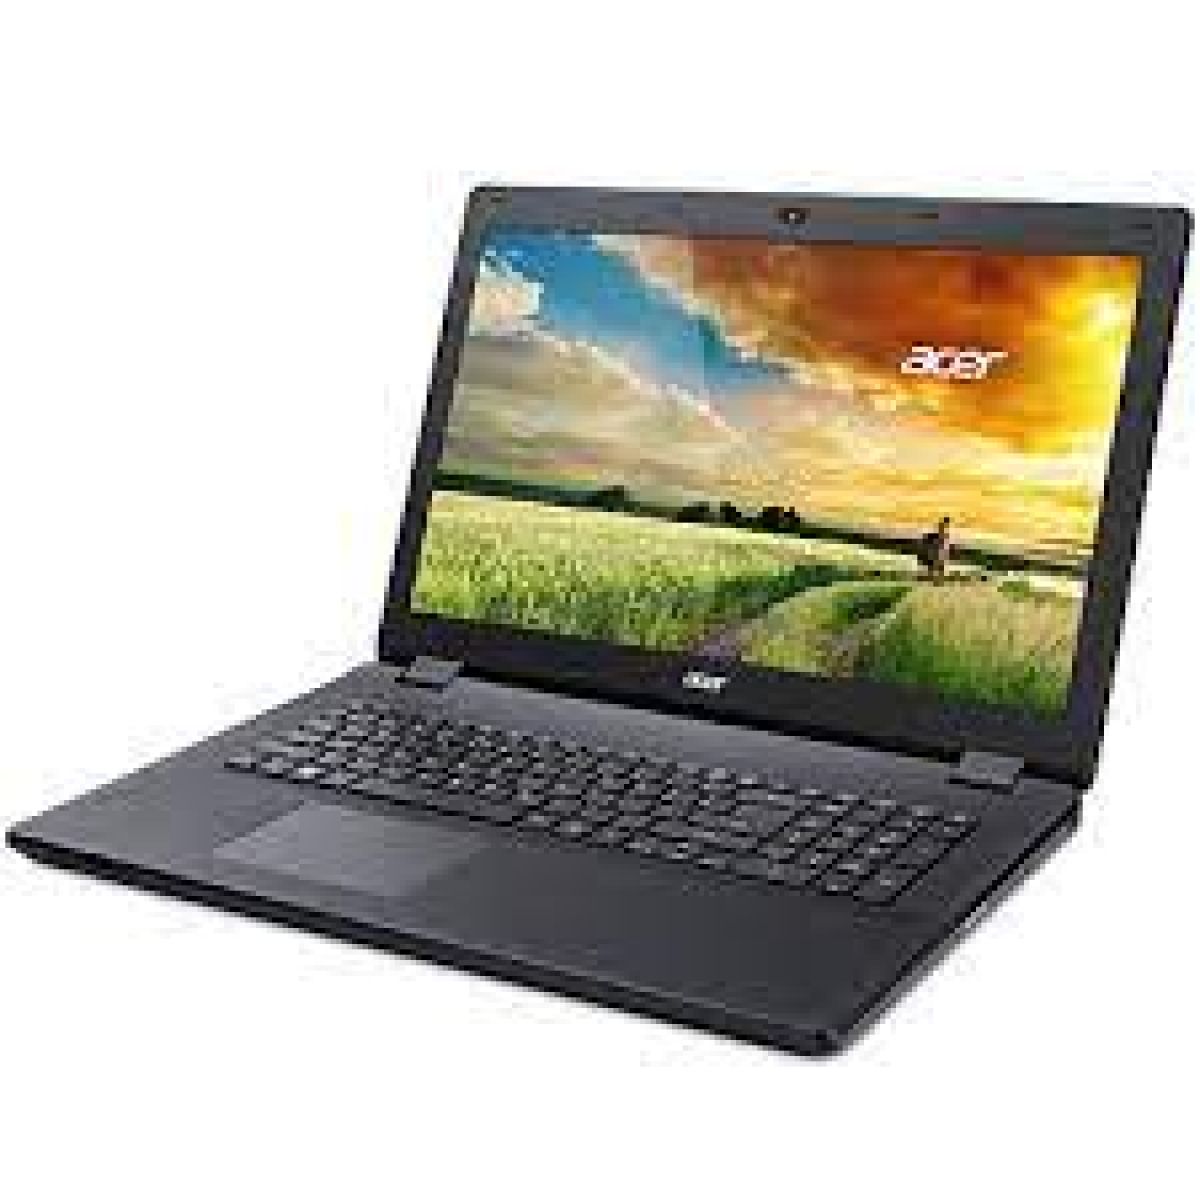 Acer Aspire ES 17 Intel Pentium N3700 2.4Ghz 4 Go HDD 1 To